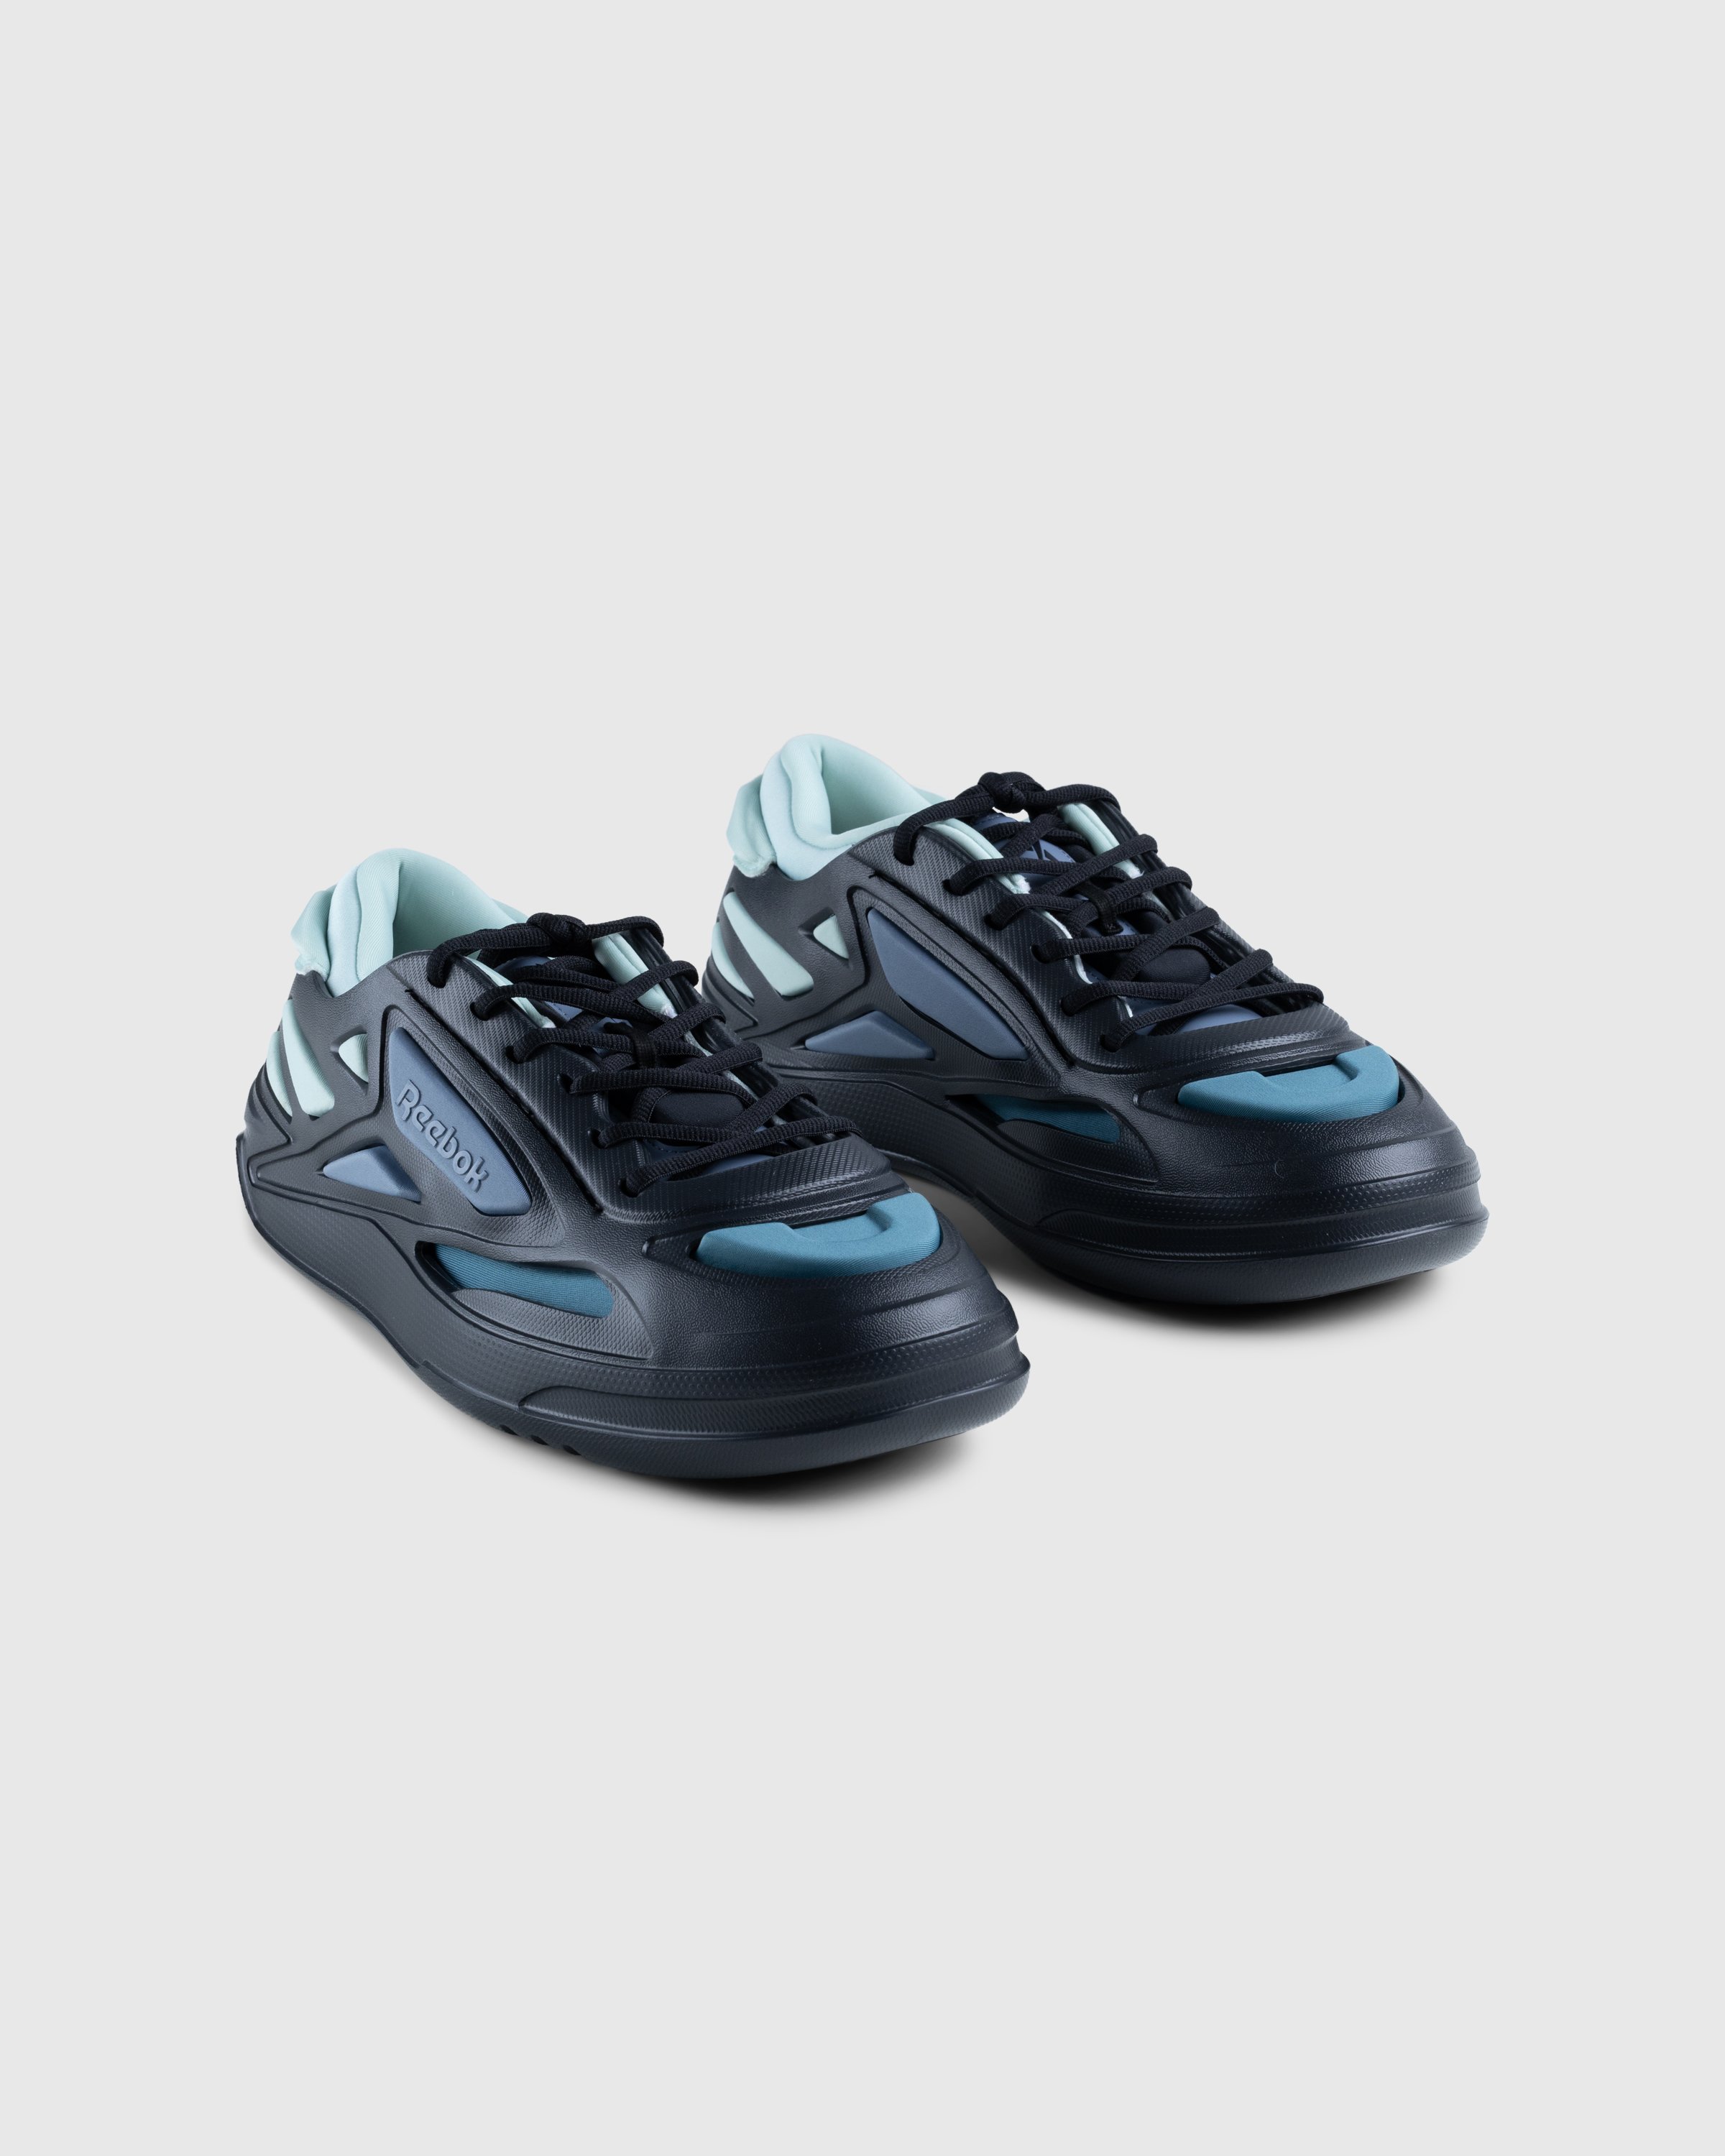 Reebok - Future Club C Black/Dusty Blue - Footwear - Multi - Image 3